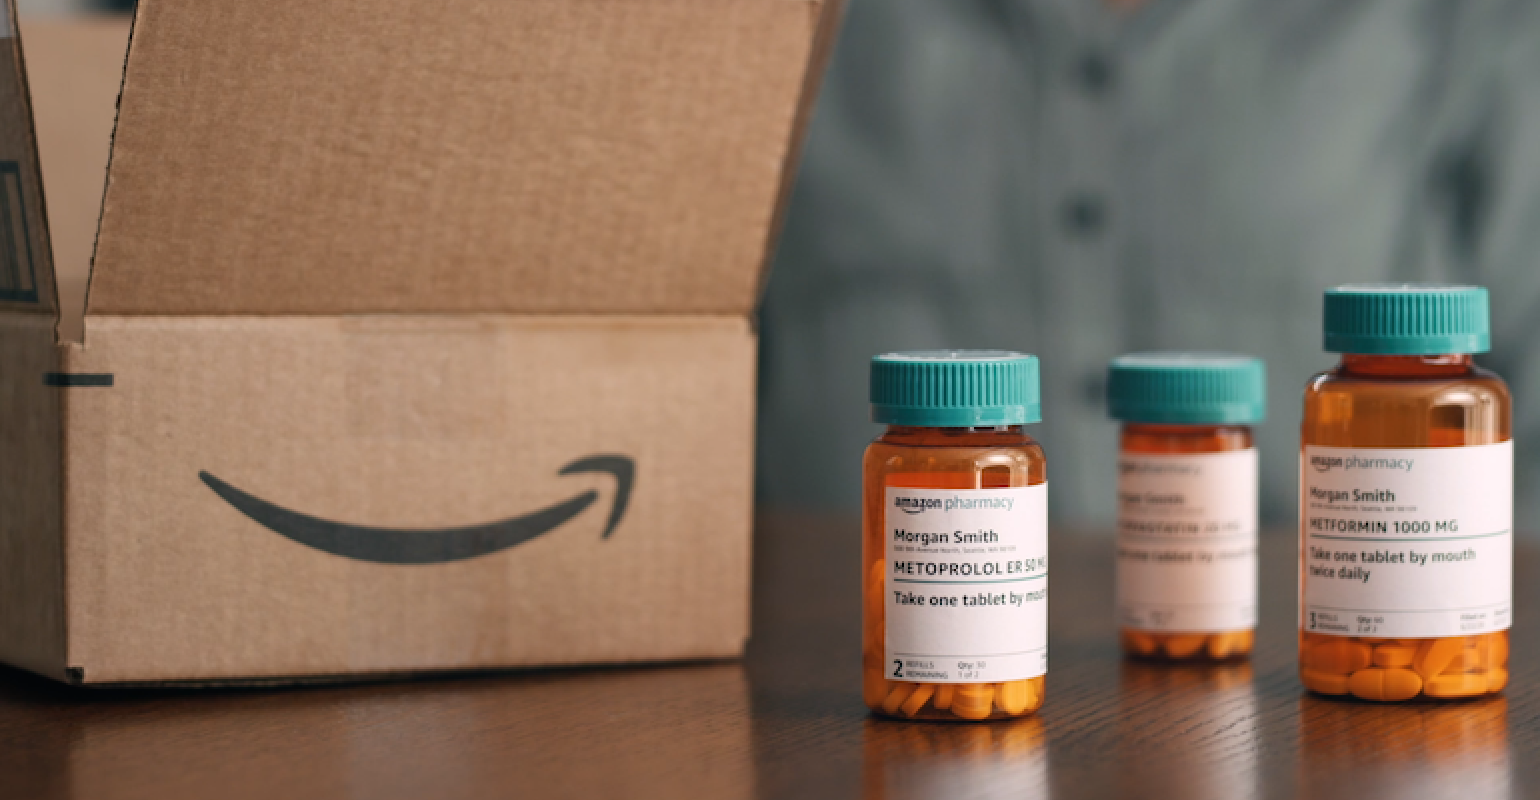 Amazon jumps into pharmacy arena with Amazon Pharmacy | Supermarket News